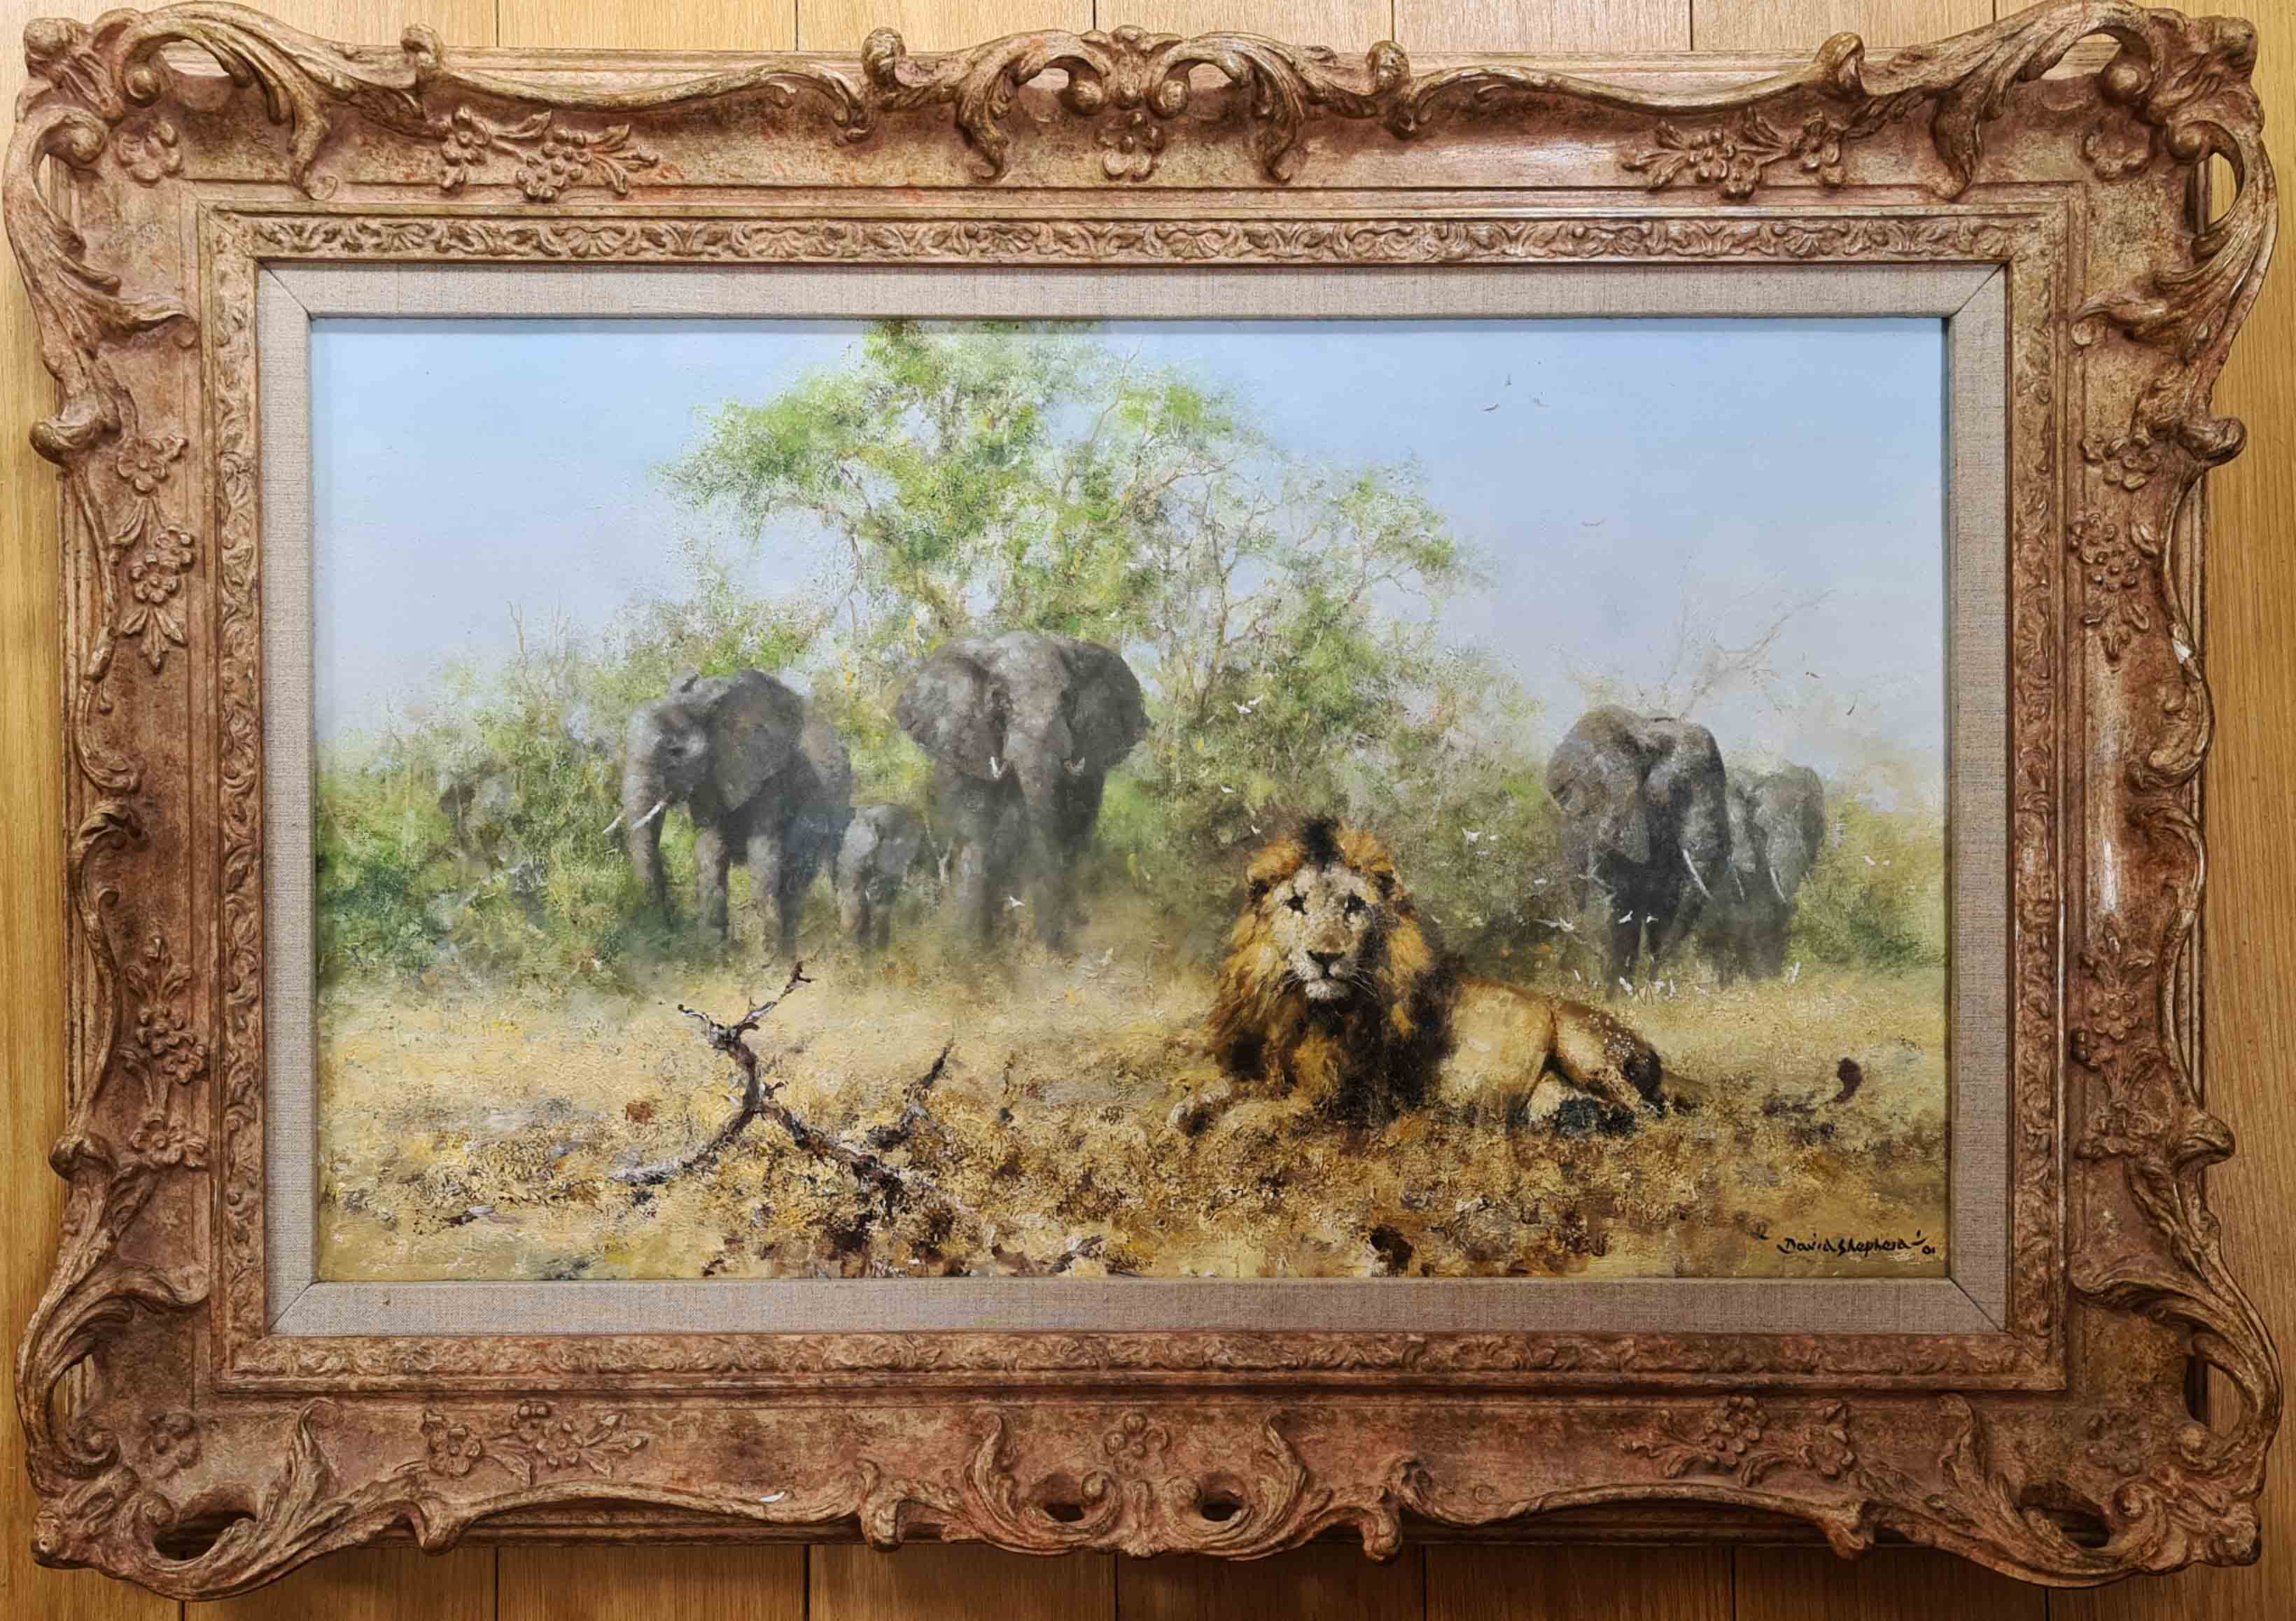 david shepherd original, Elephants and Lion, painting